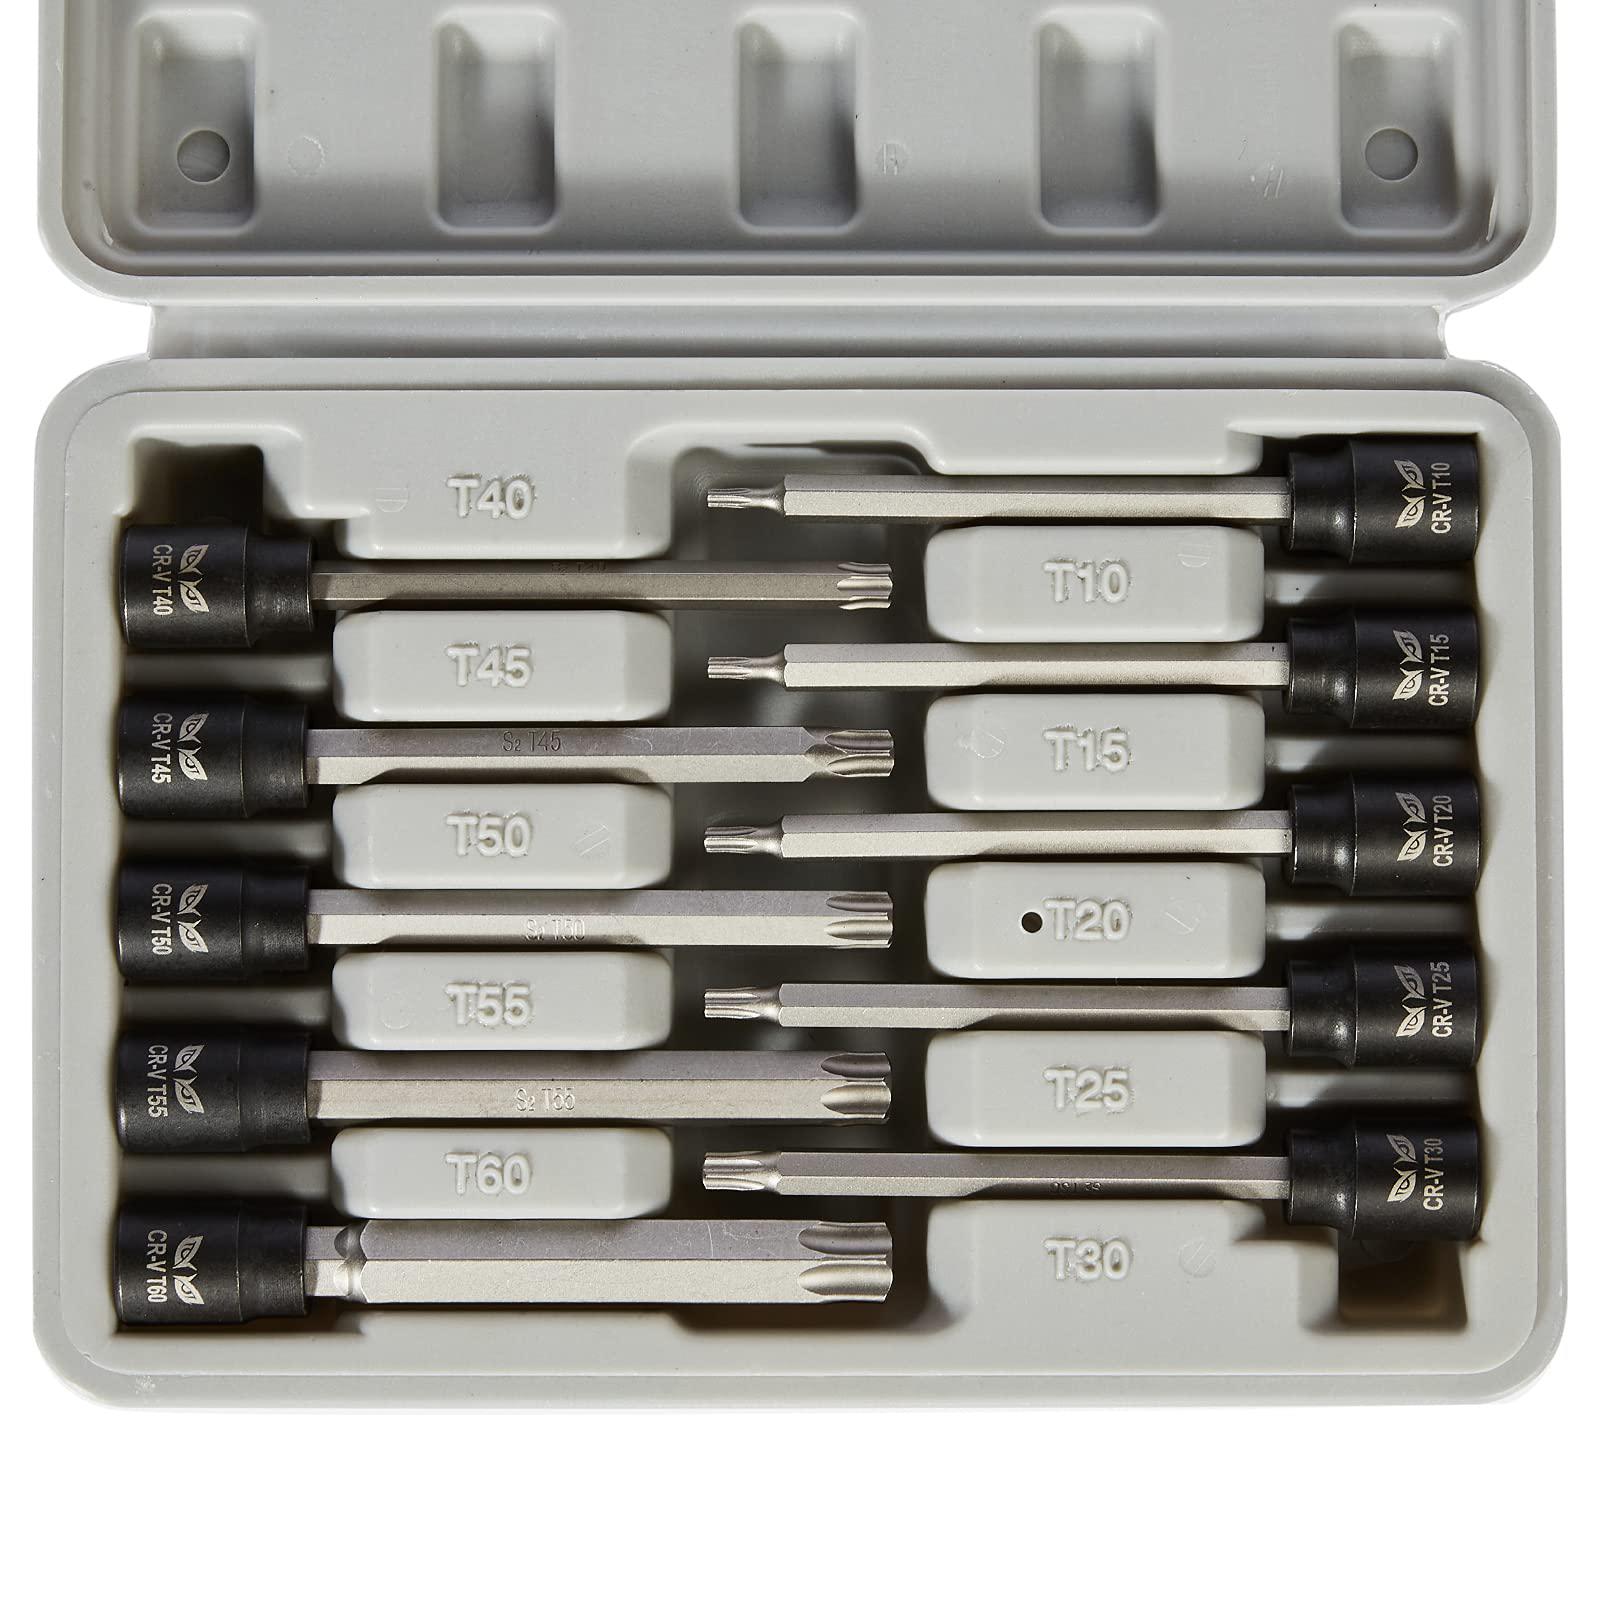 Owl Tools extra long torx bit socket set (10 pack) - long 3.5" torx bit in 3/8" drive t10 - t60